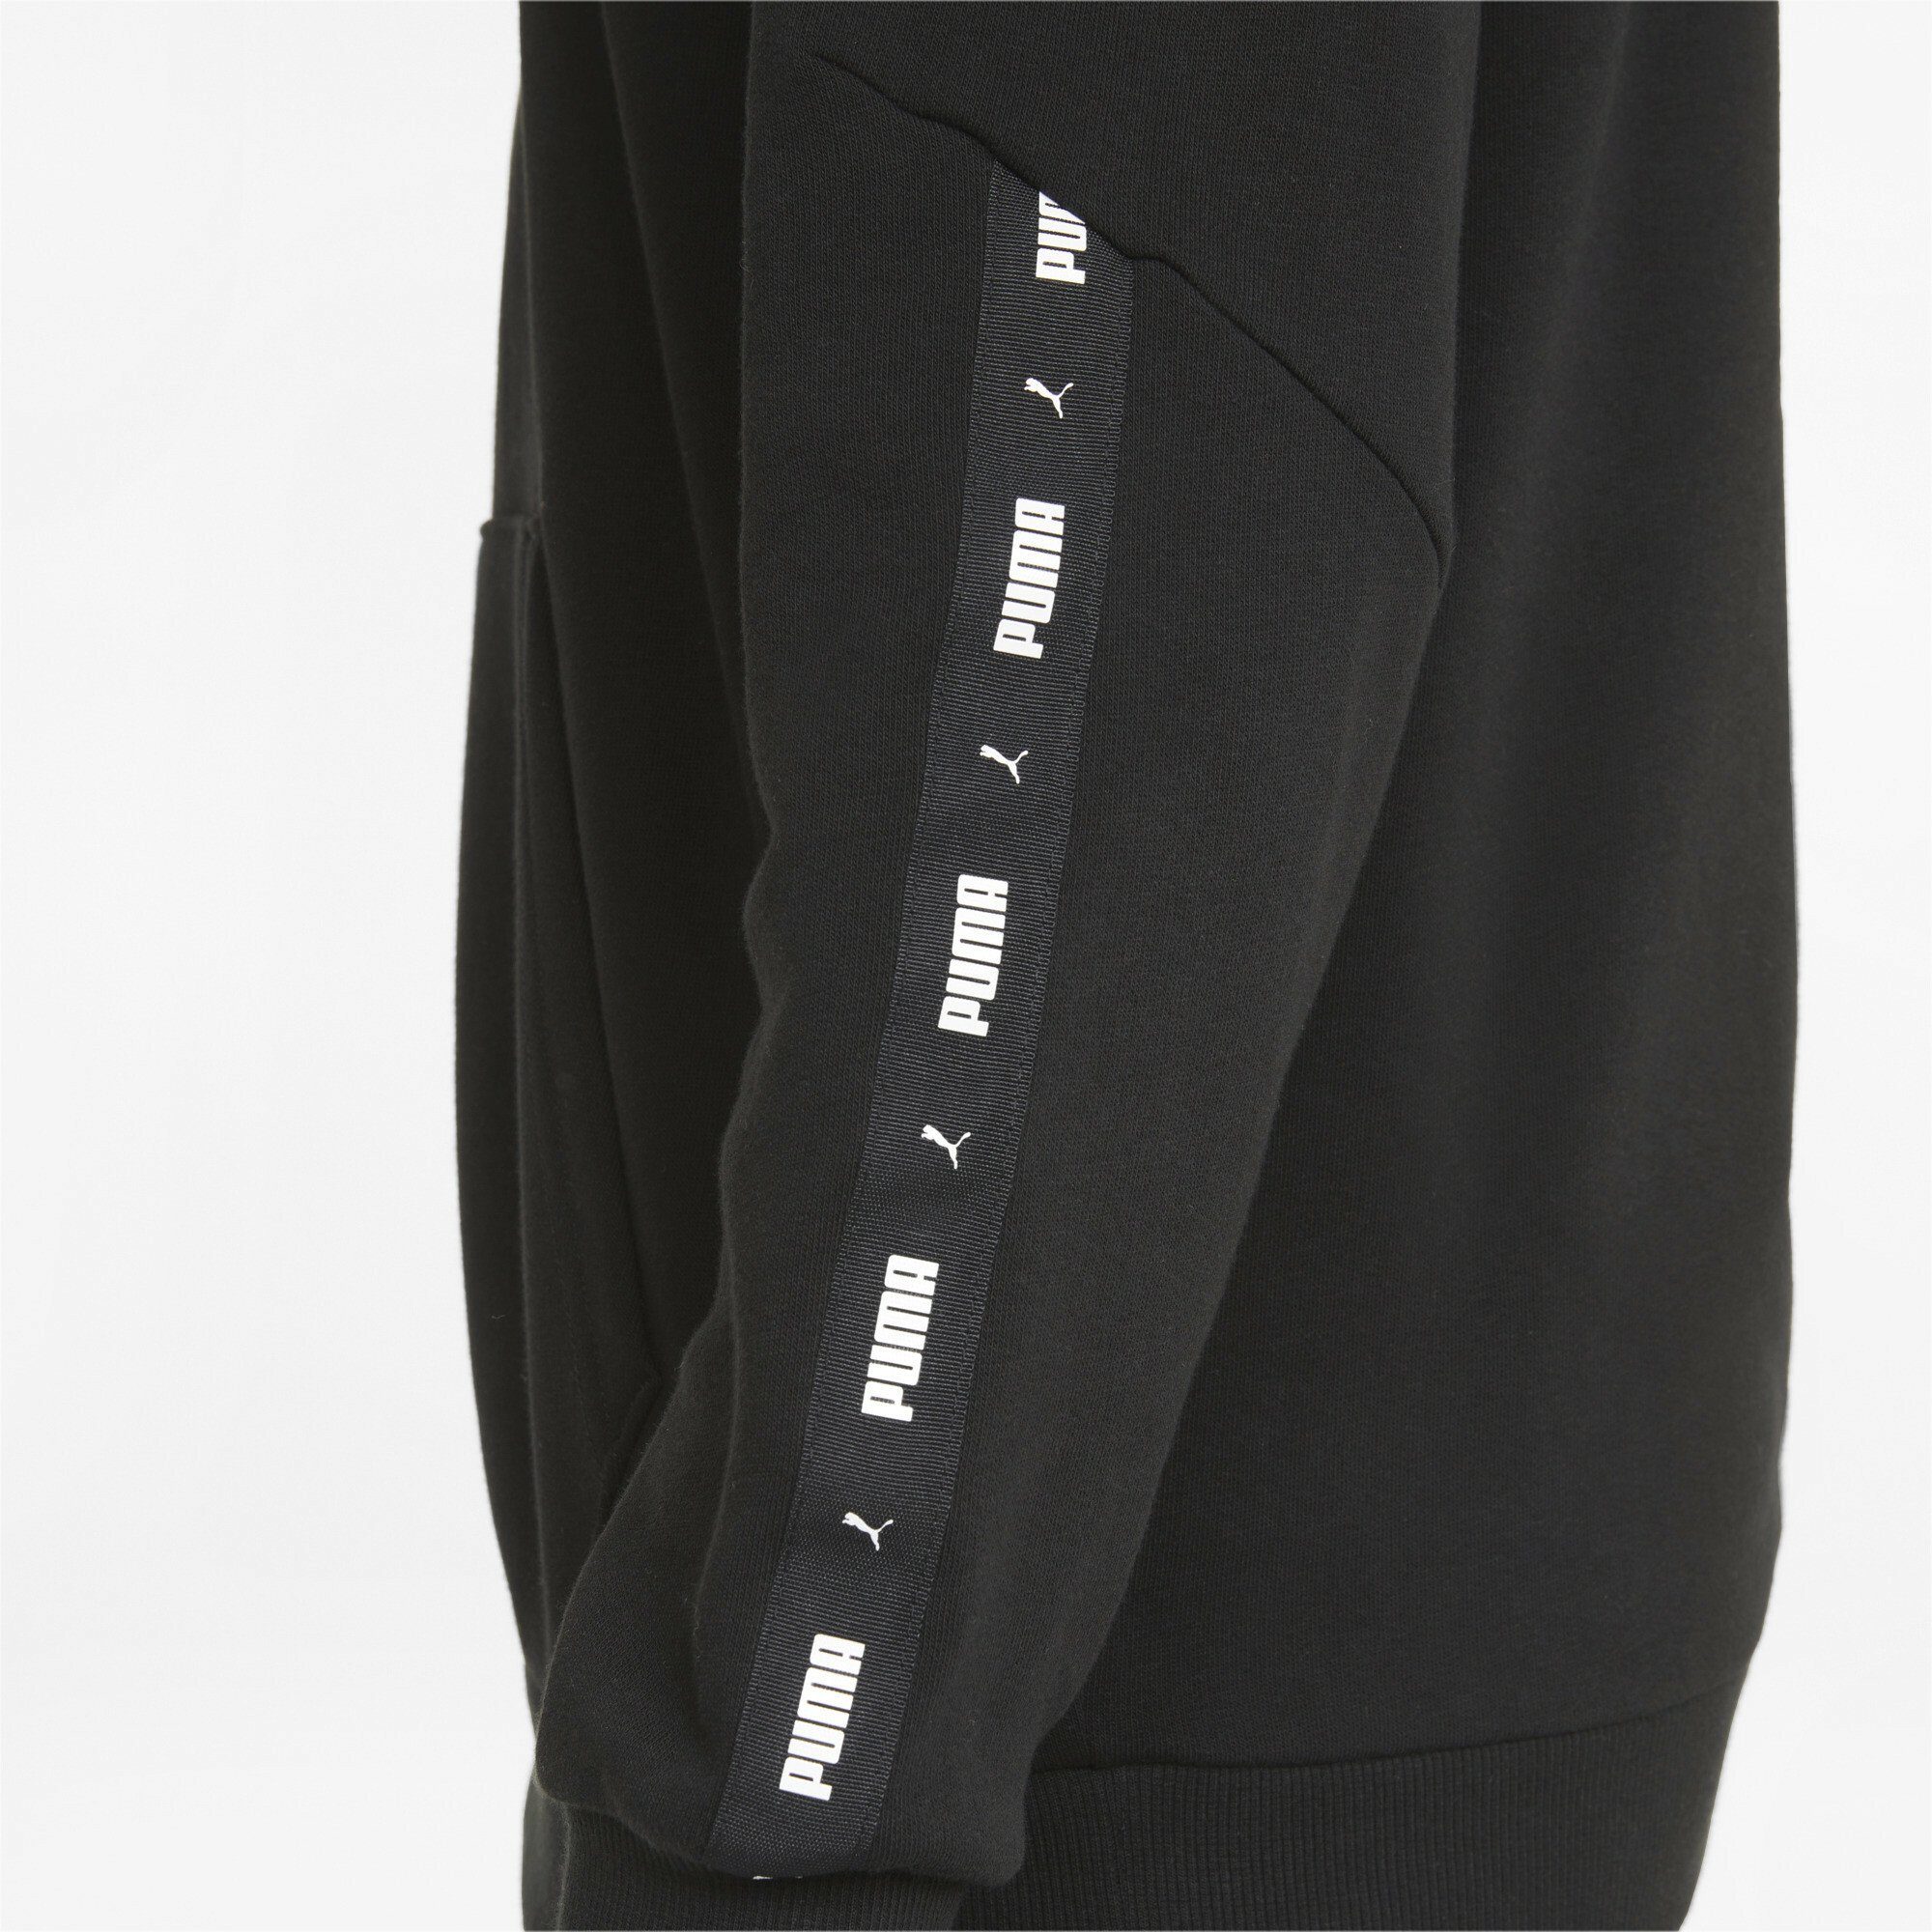 PUMA Sweatshirt Black Essentials+ Herren Hoodie